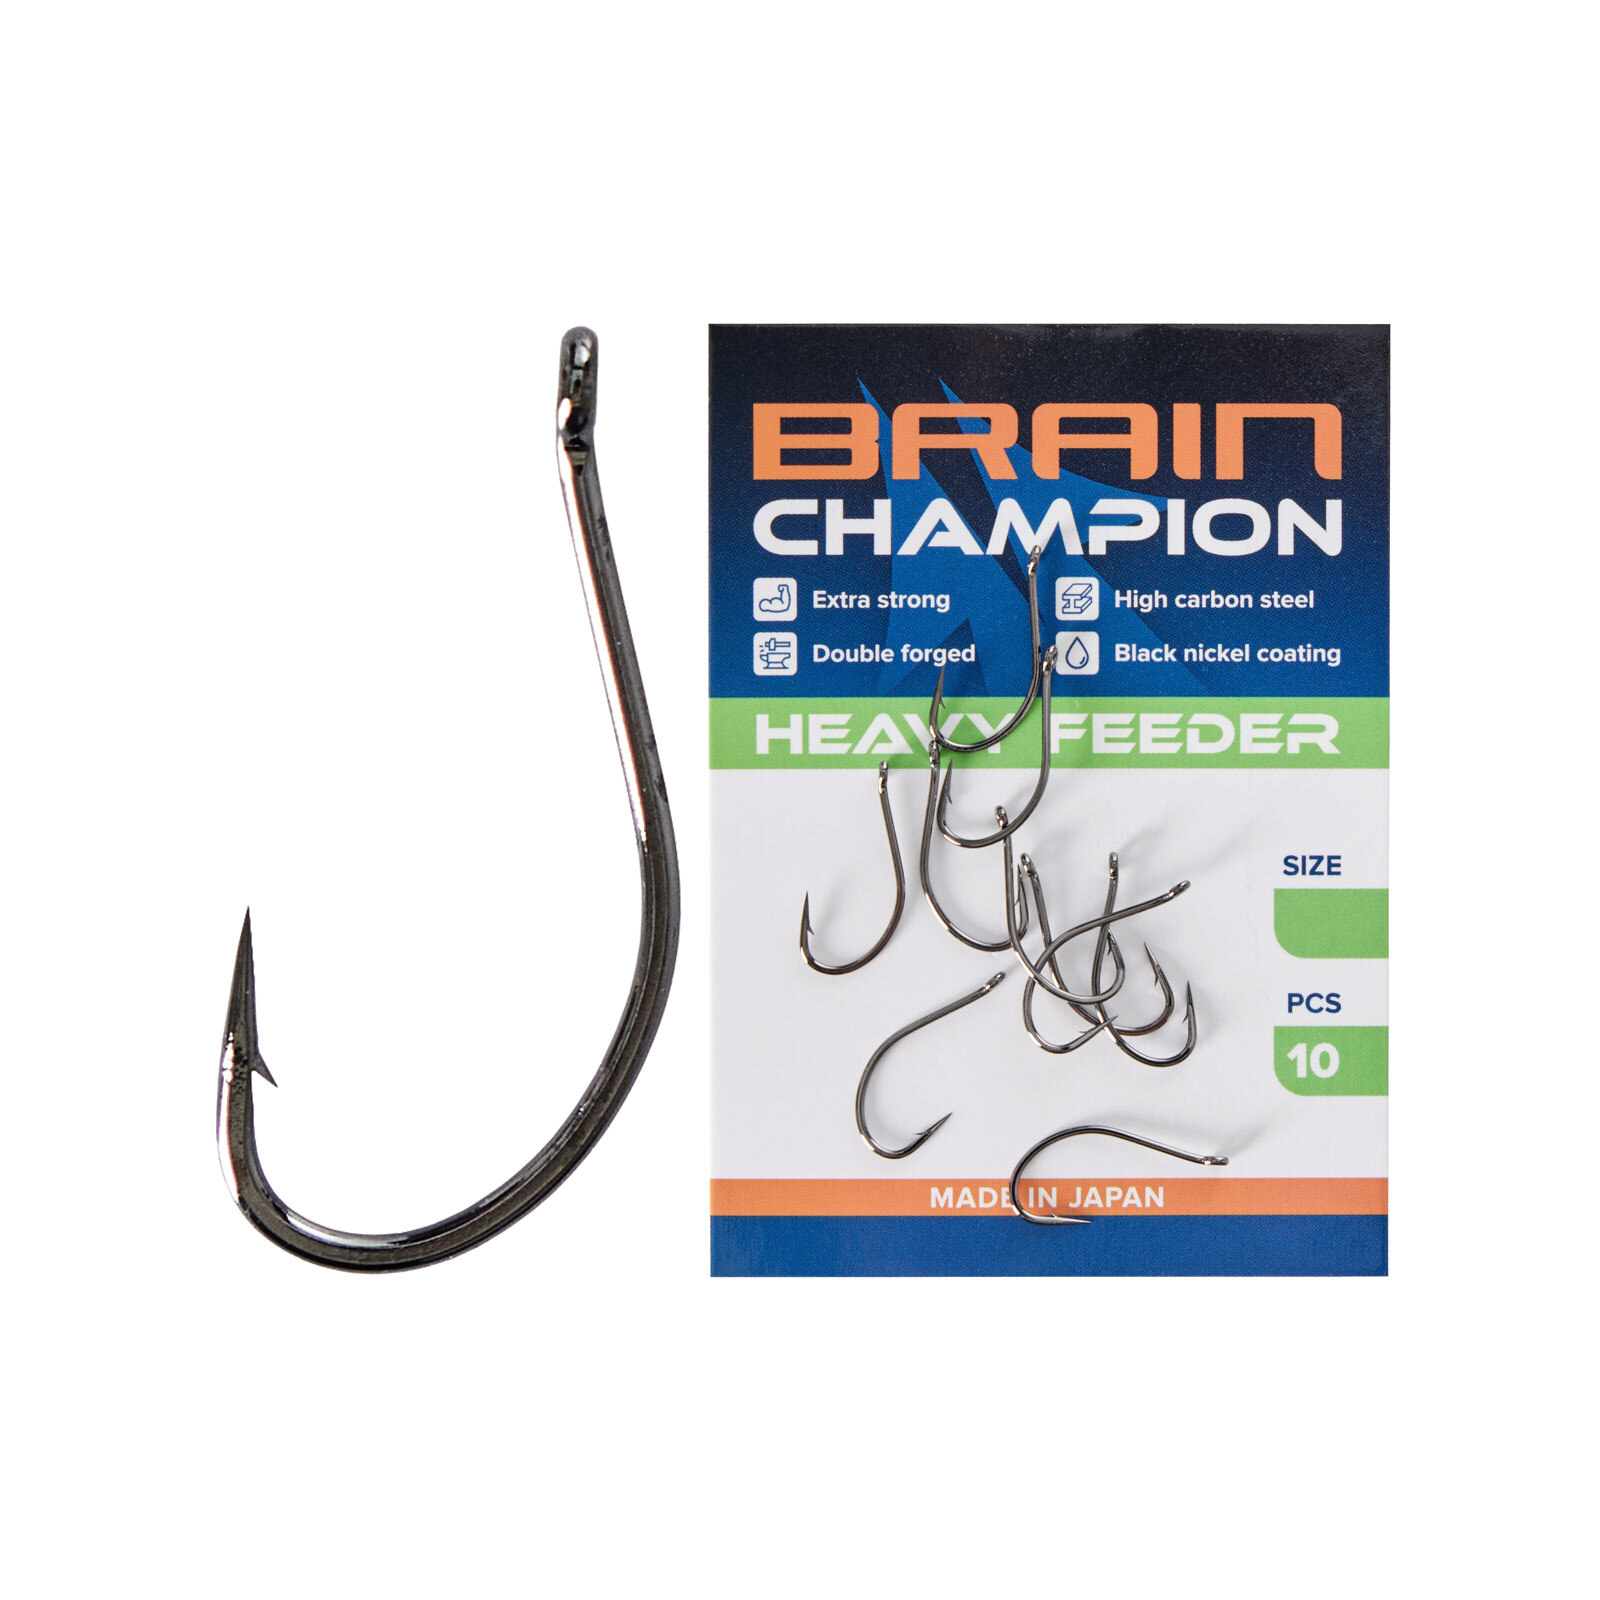 Гачок Brain fishing Champion Heavy Feeder 2 (10 шт/уп) (1858.54.57)